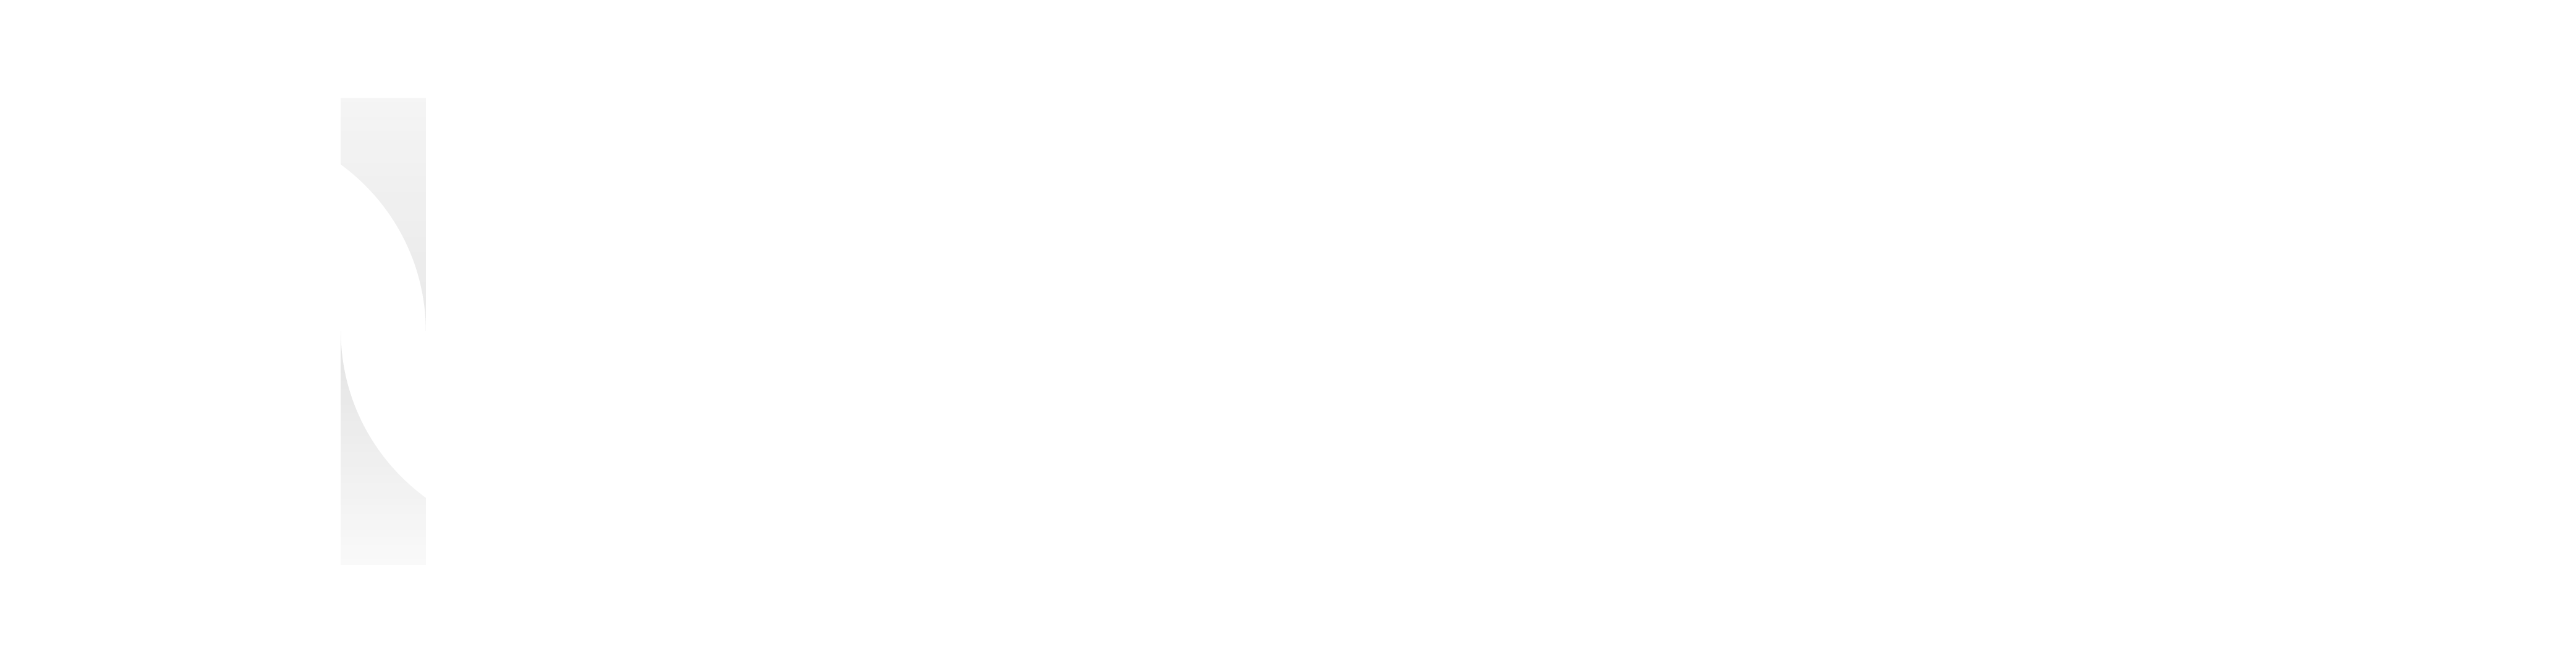 Raynex X-Ray